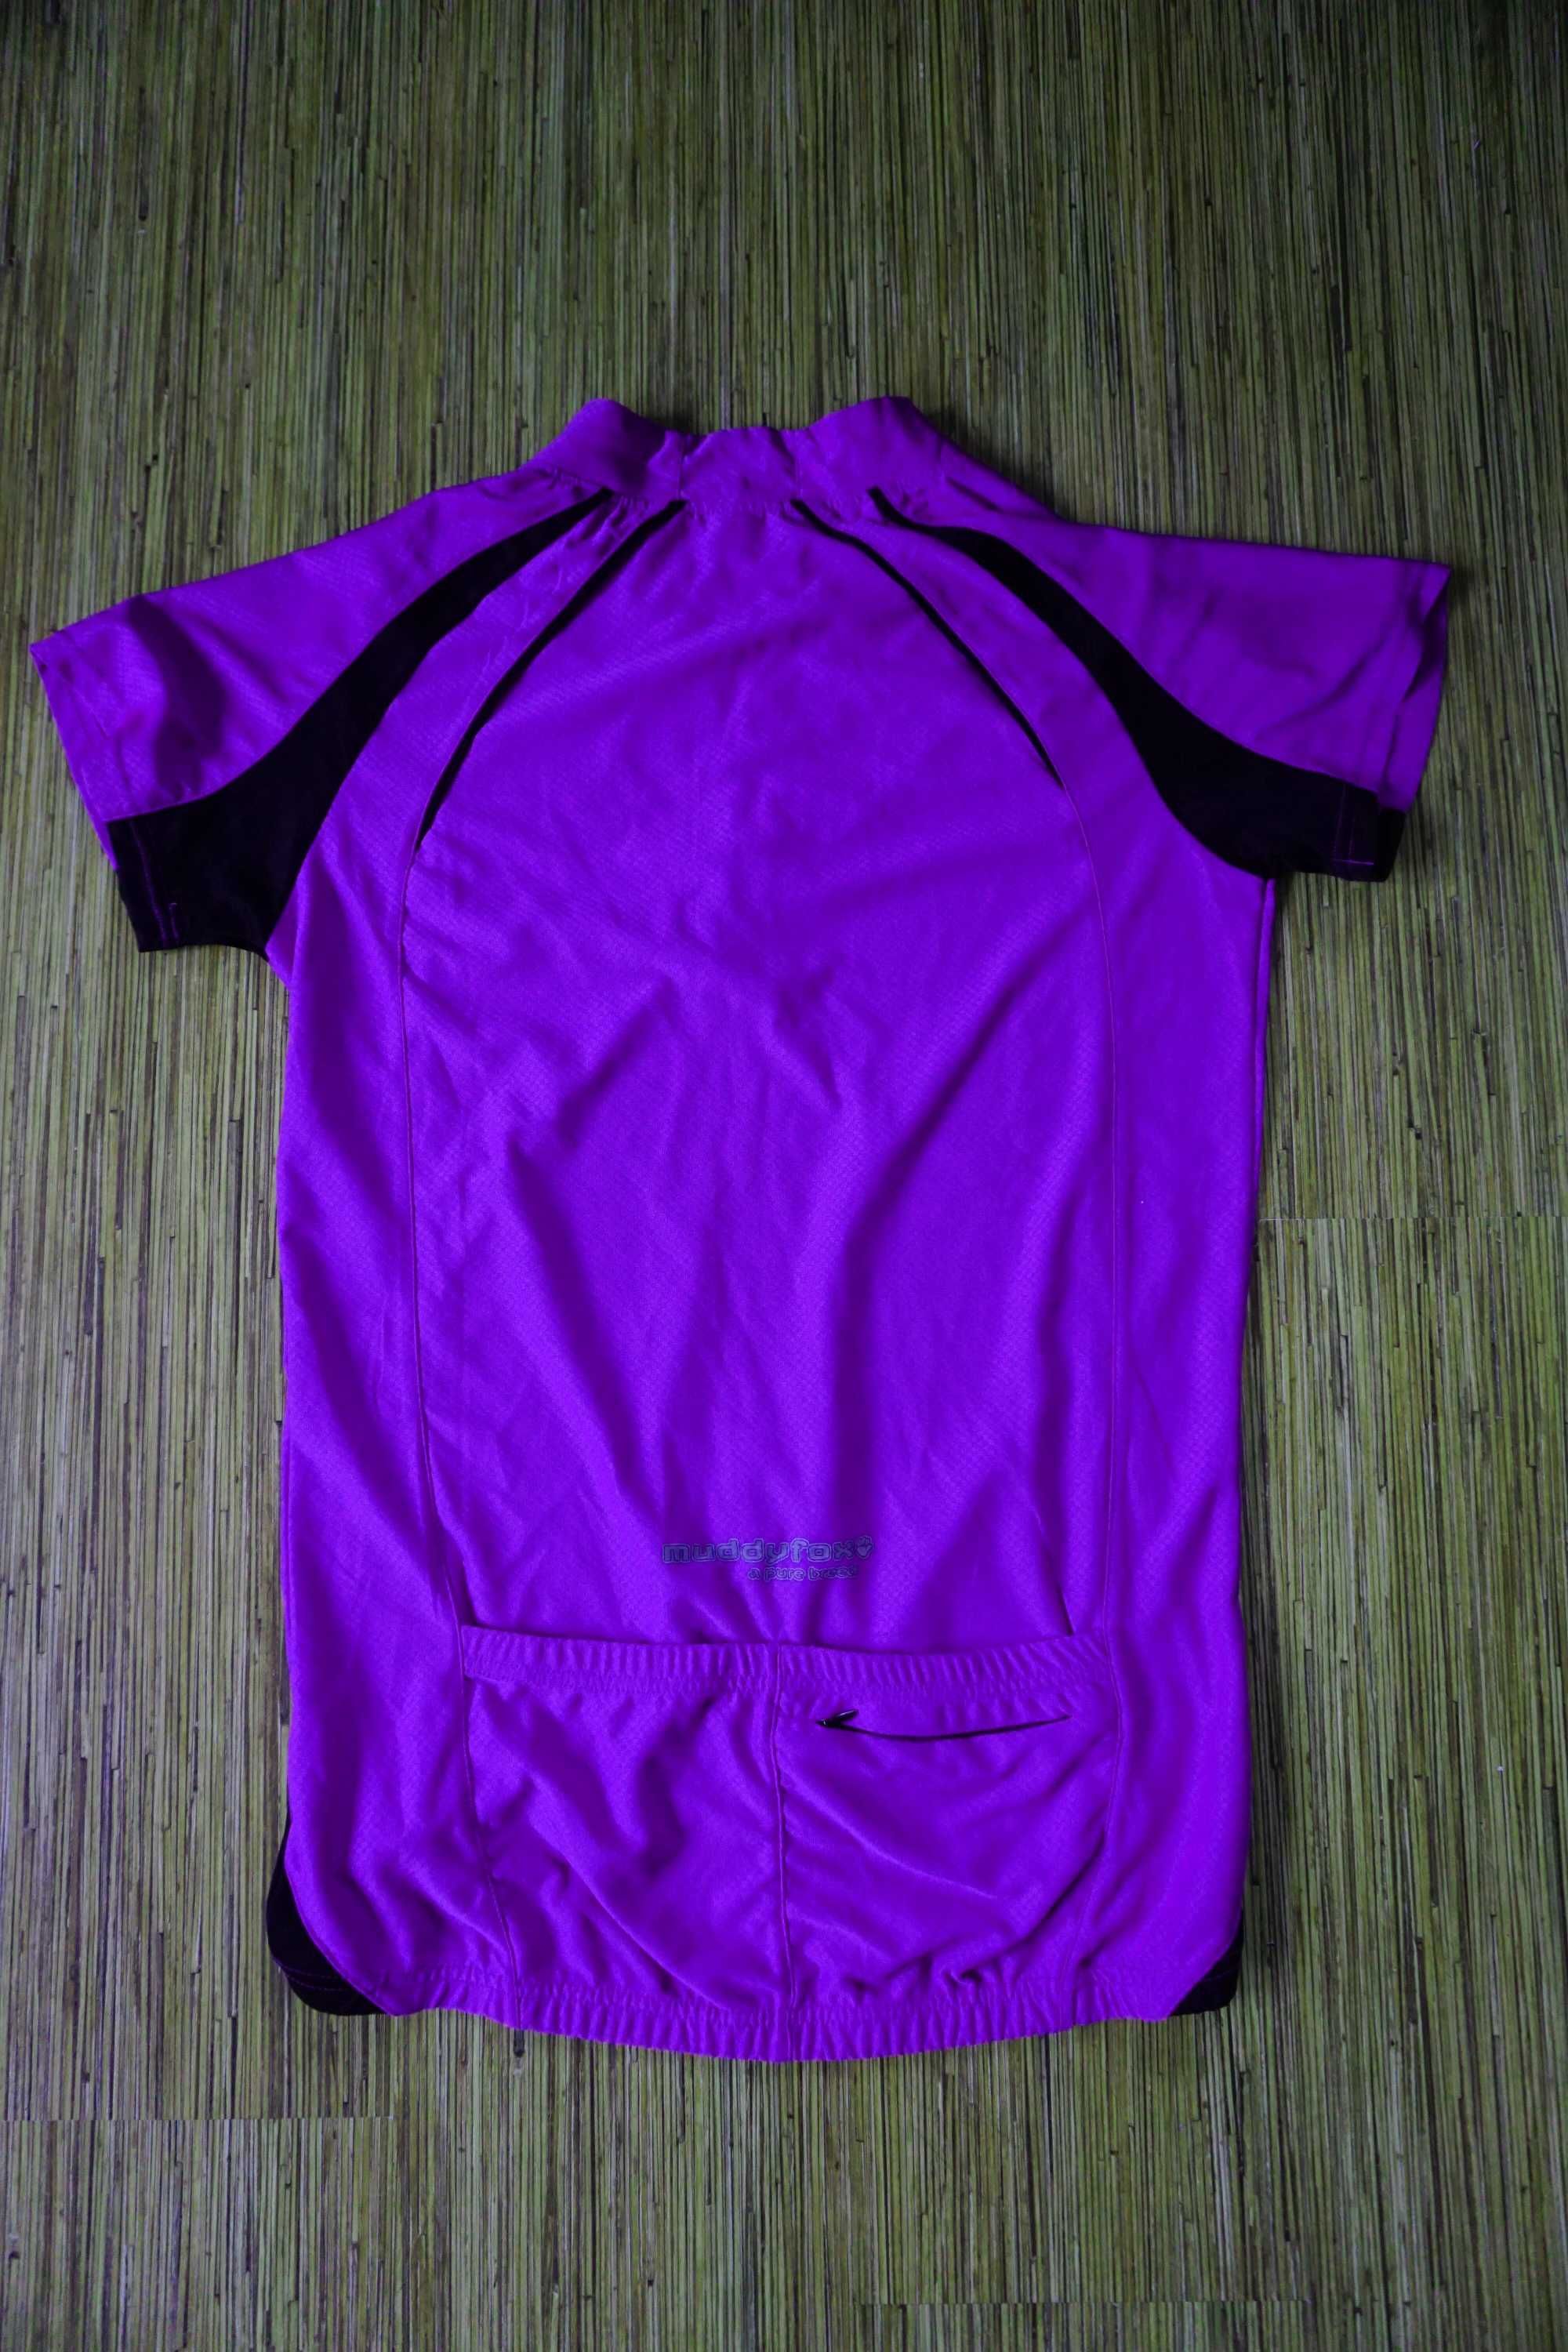 MUDDYFOX Damska Koszulka rowerowa Biegowa L/XL fioletowa czarna